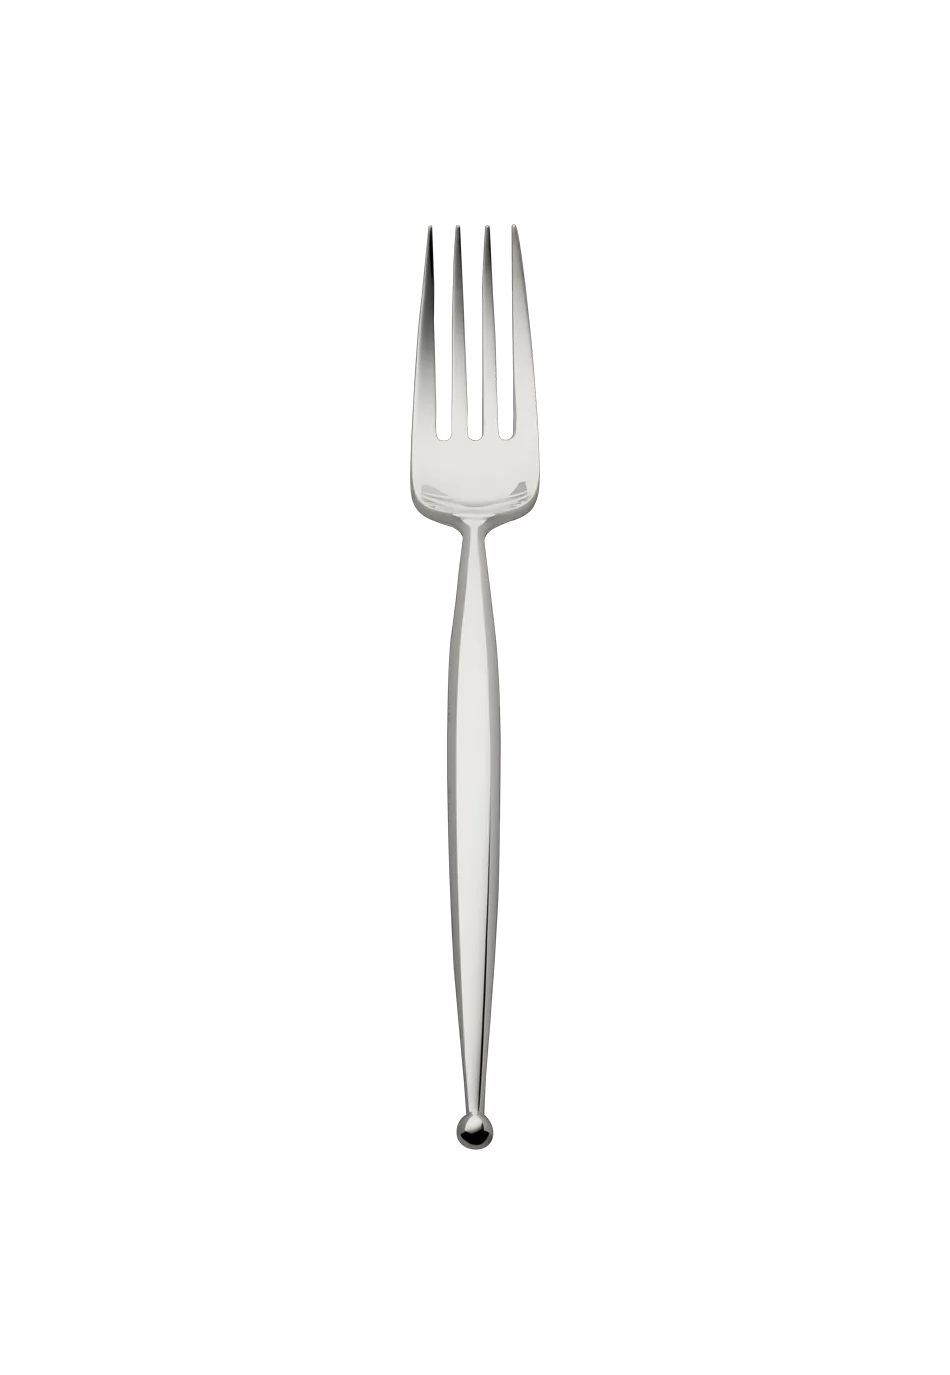 Gio Menu Fork (150g massive silverplated)